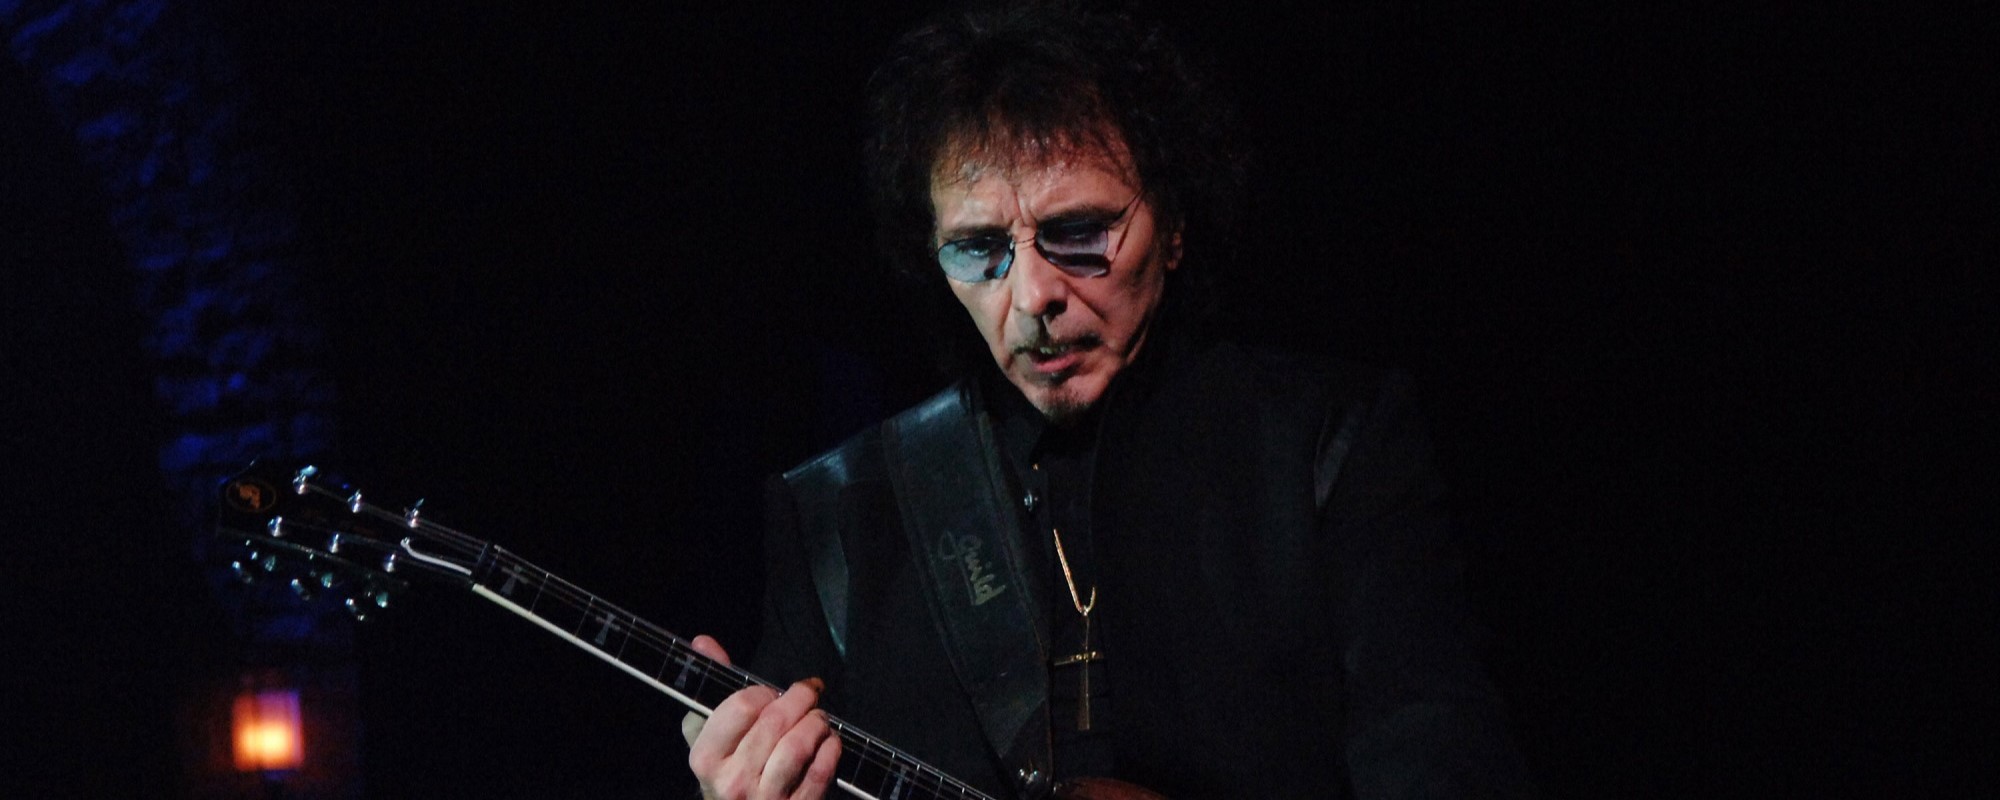 Black Sabbath’s Tony Iommi Hypes New Solo Music Arriving: “It’s Sounding Really Good”